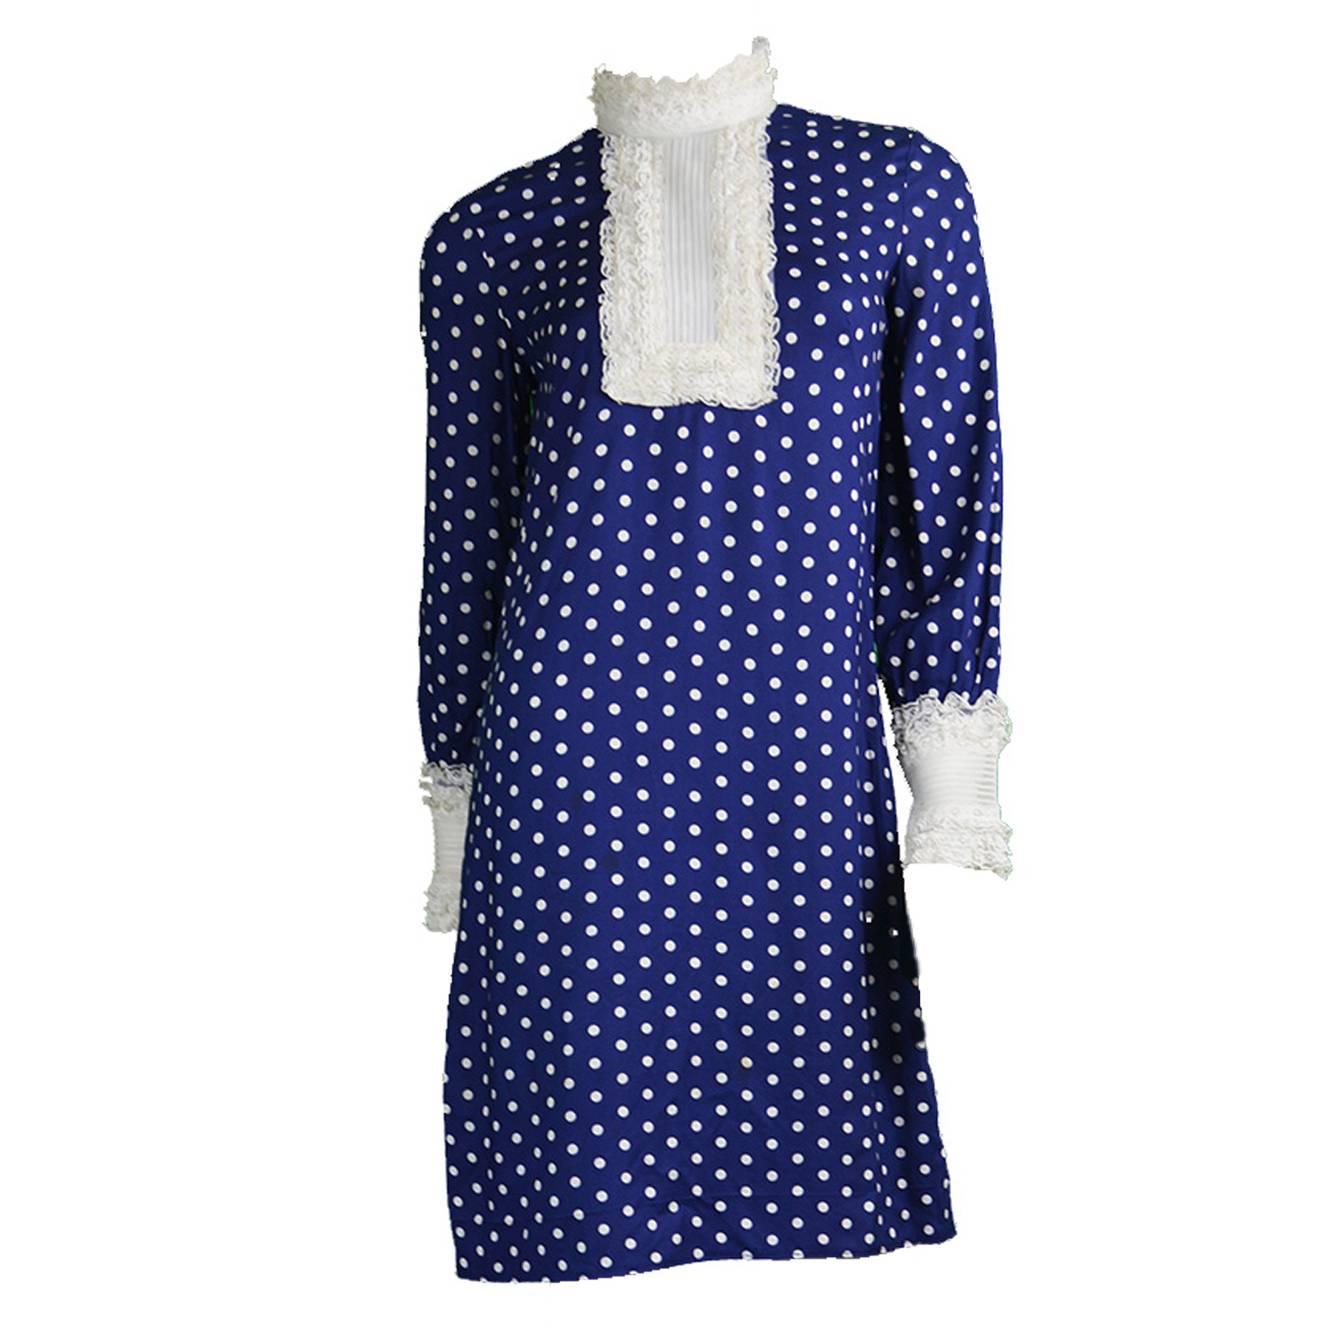 Vintage 1960s Jean Varon Blue & White Polka Dot Mod Shift Dress